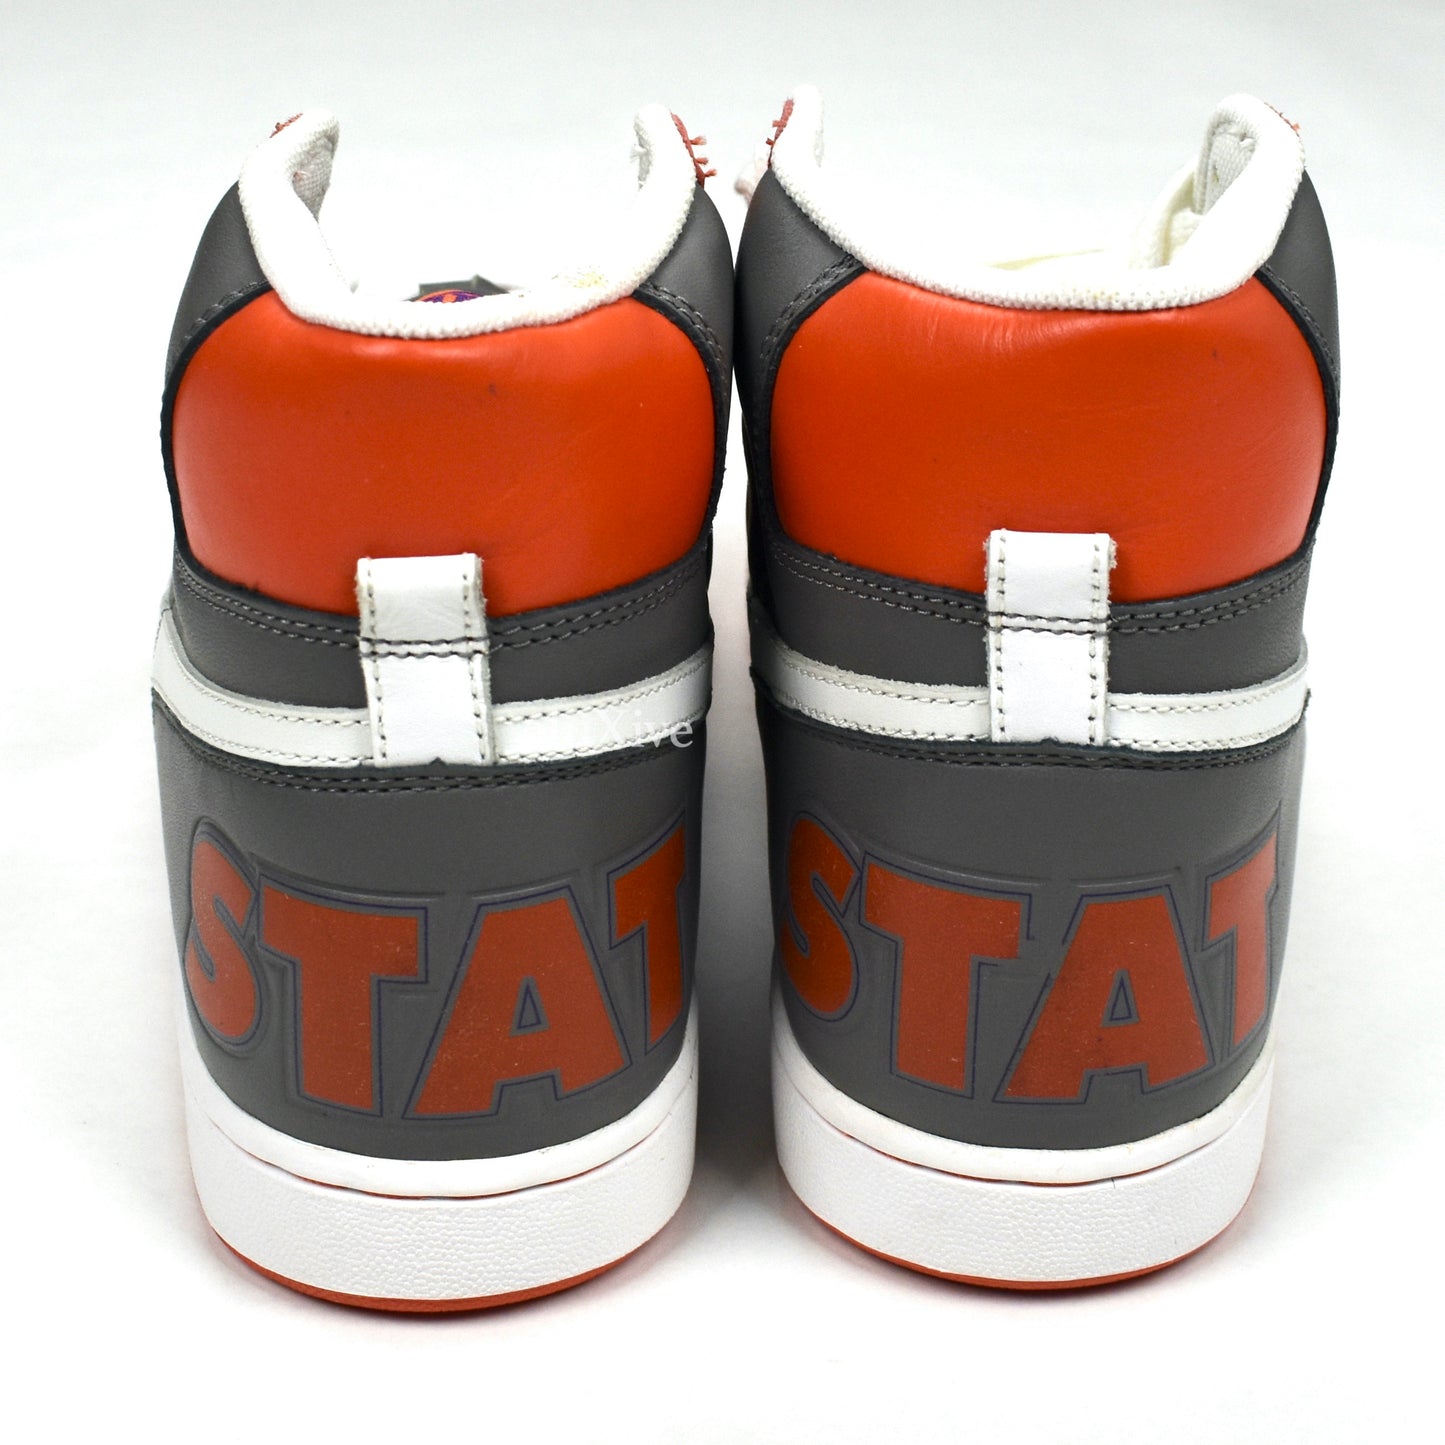 Nike - Terminator Zoom High 'STAT' (Gray/Orange/White)